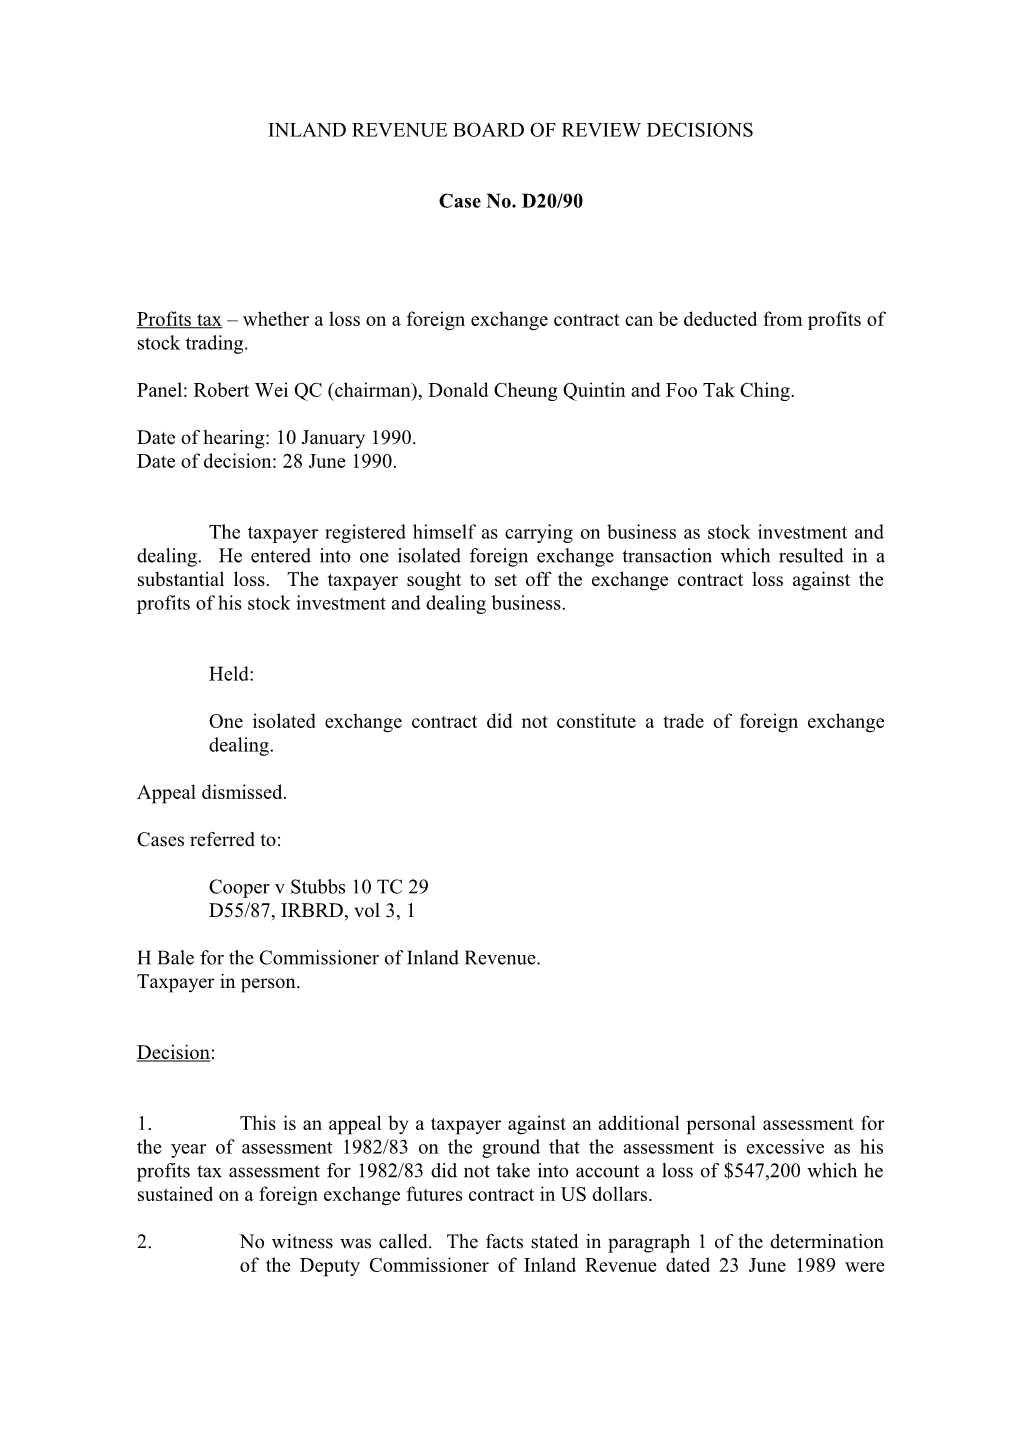 Panel: Robert Wei QC (Chairman), Donald Cheung Quintin and Foo Tak Ching